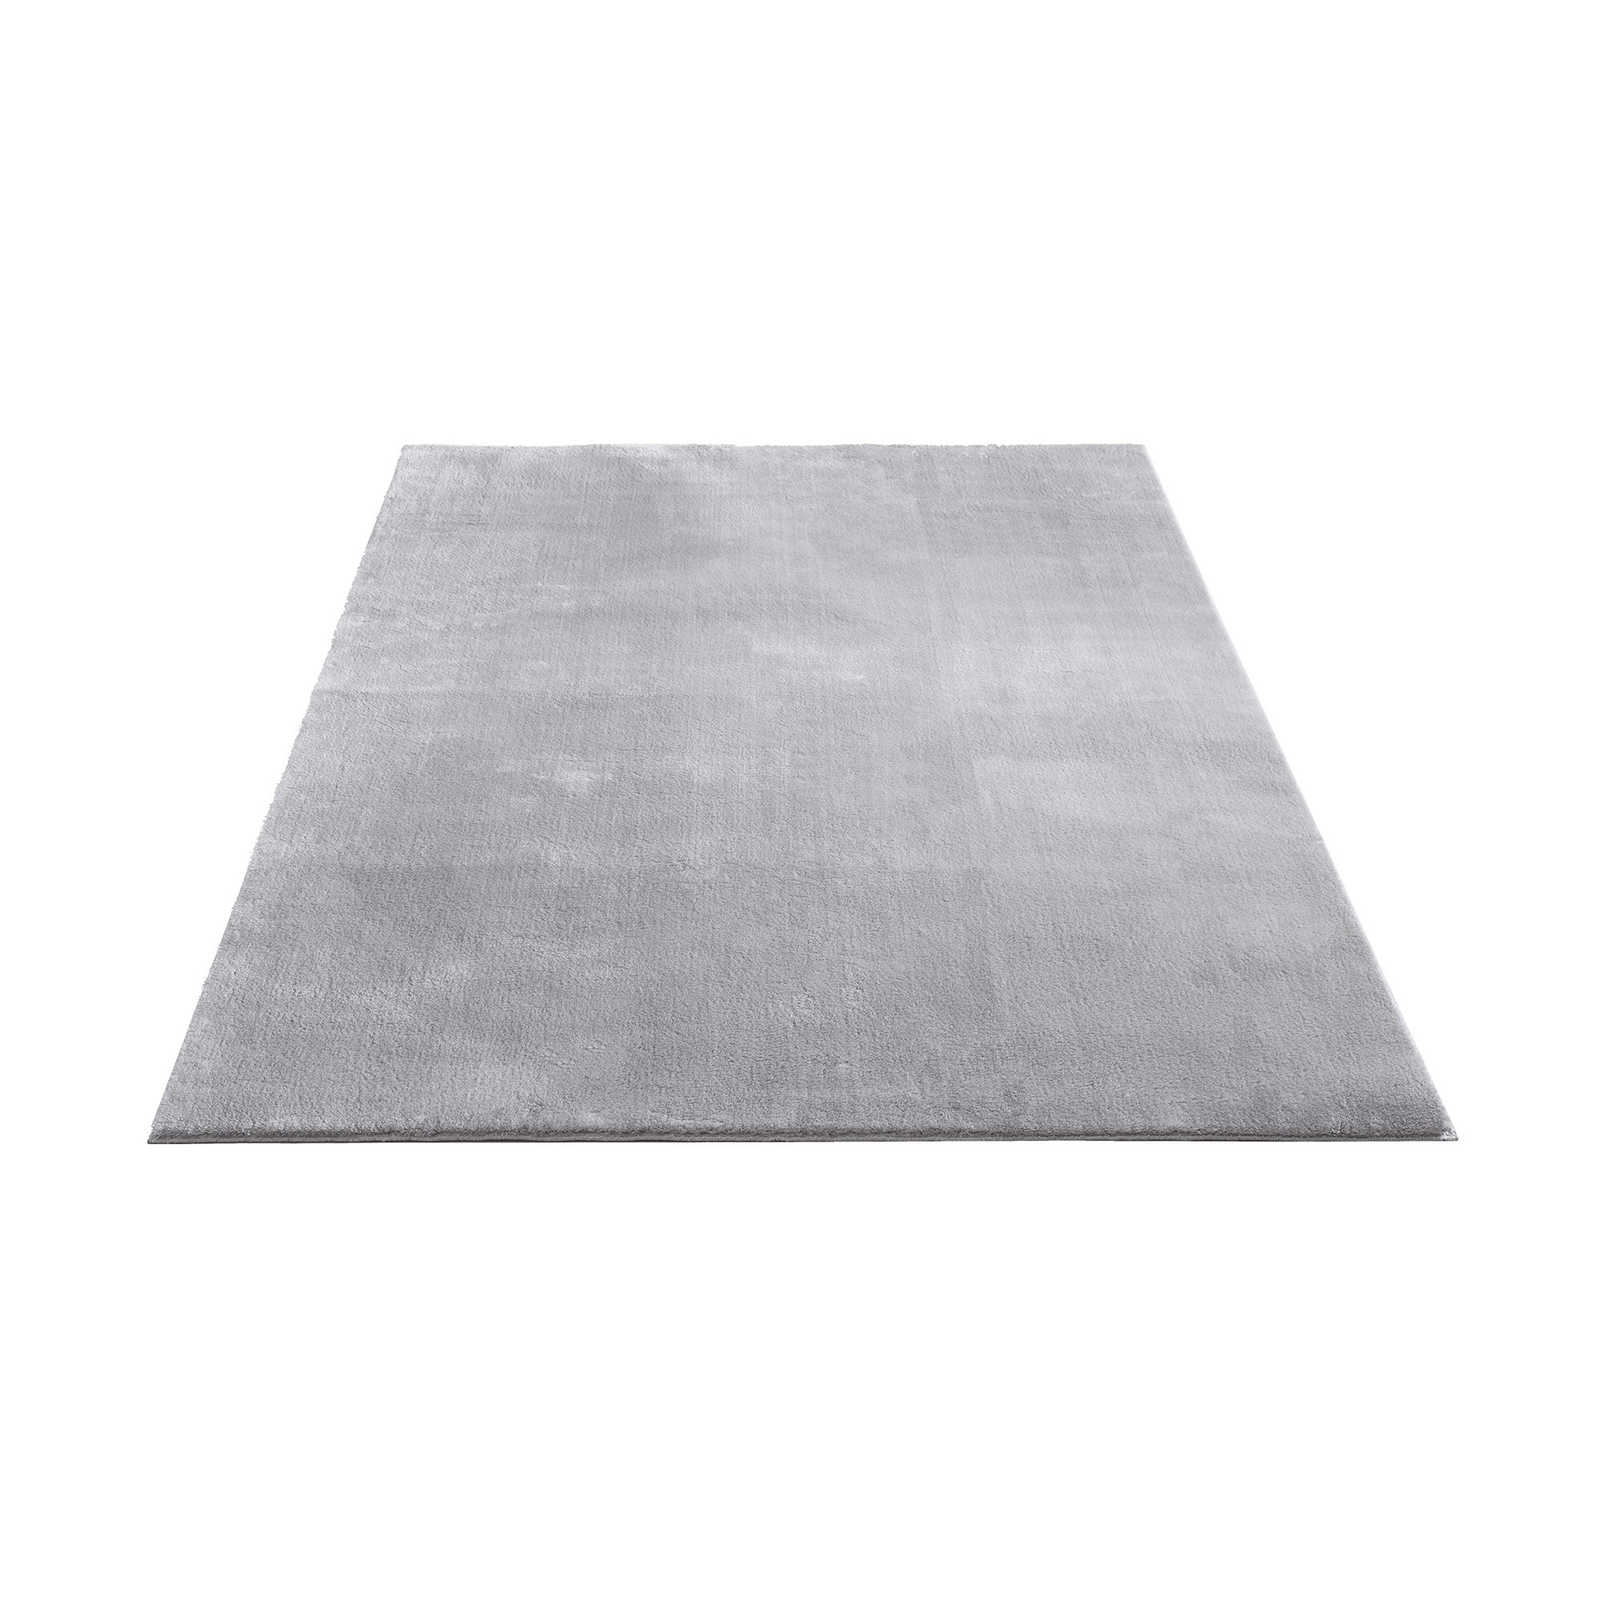 Fine high pile carpet in grey - 290 x 200 cm
